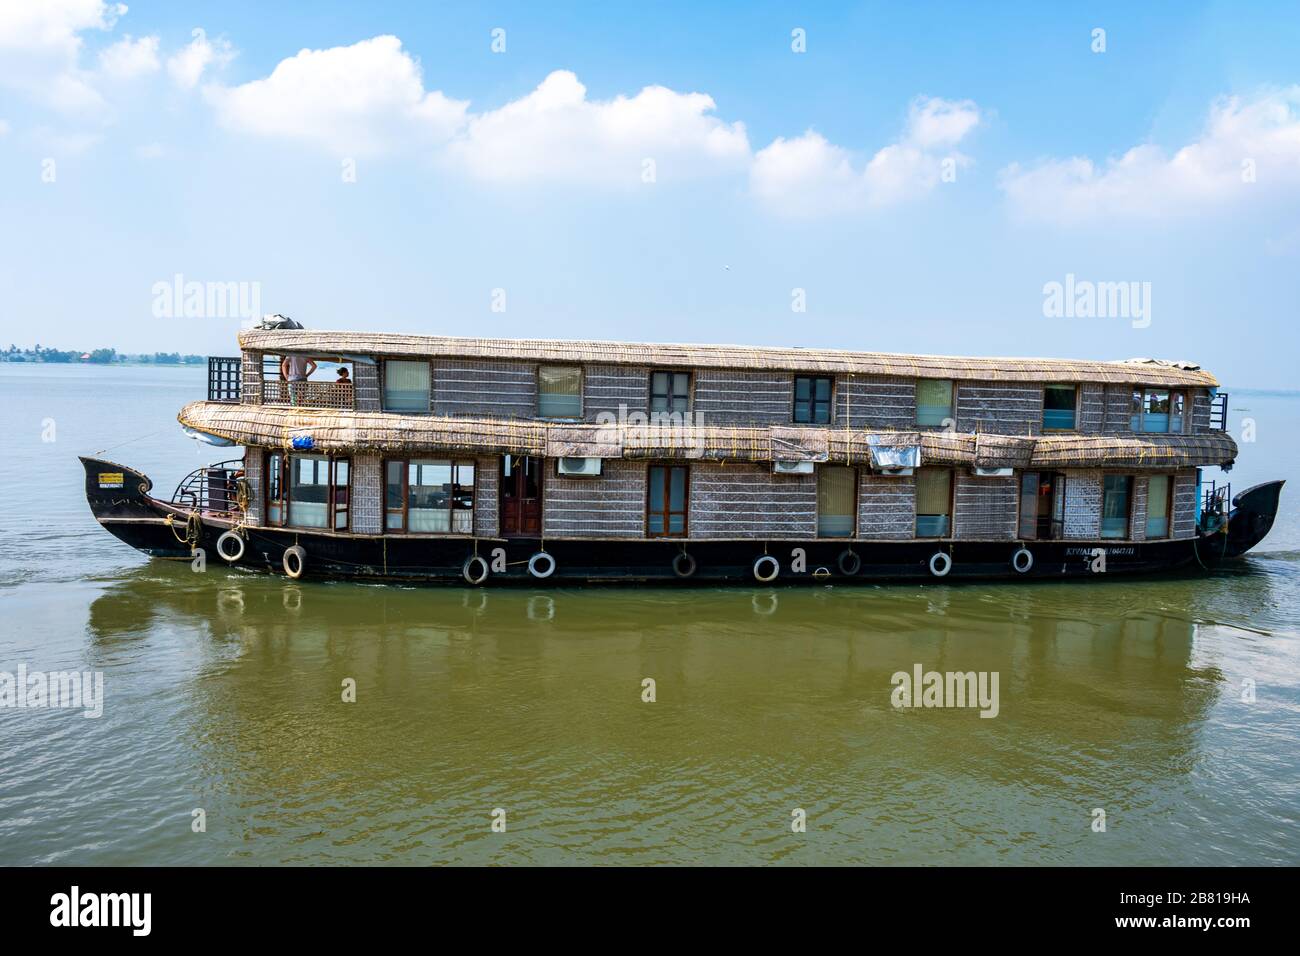 Alapphuzza, Kerala, India - December 25 2019 - Houseboat in Vembanad lake Stock Photo